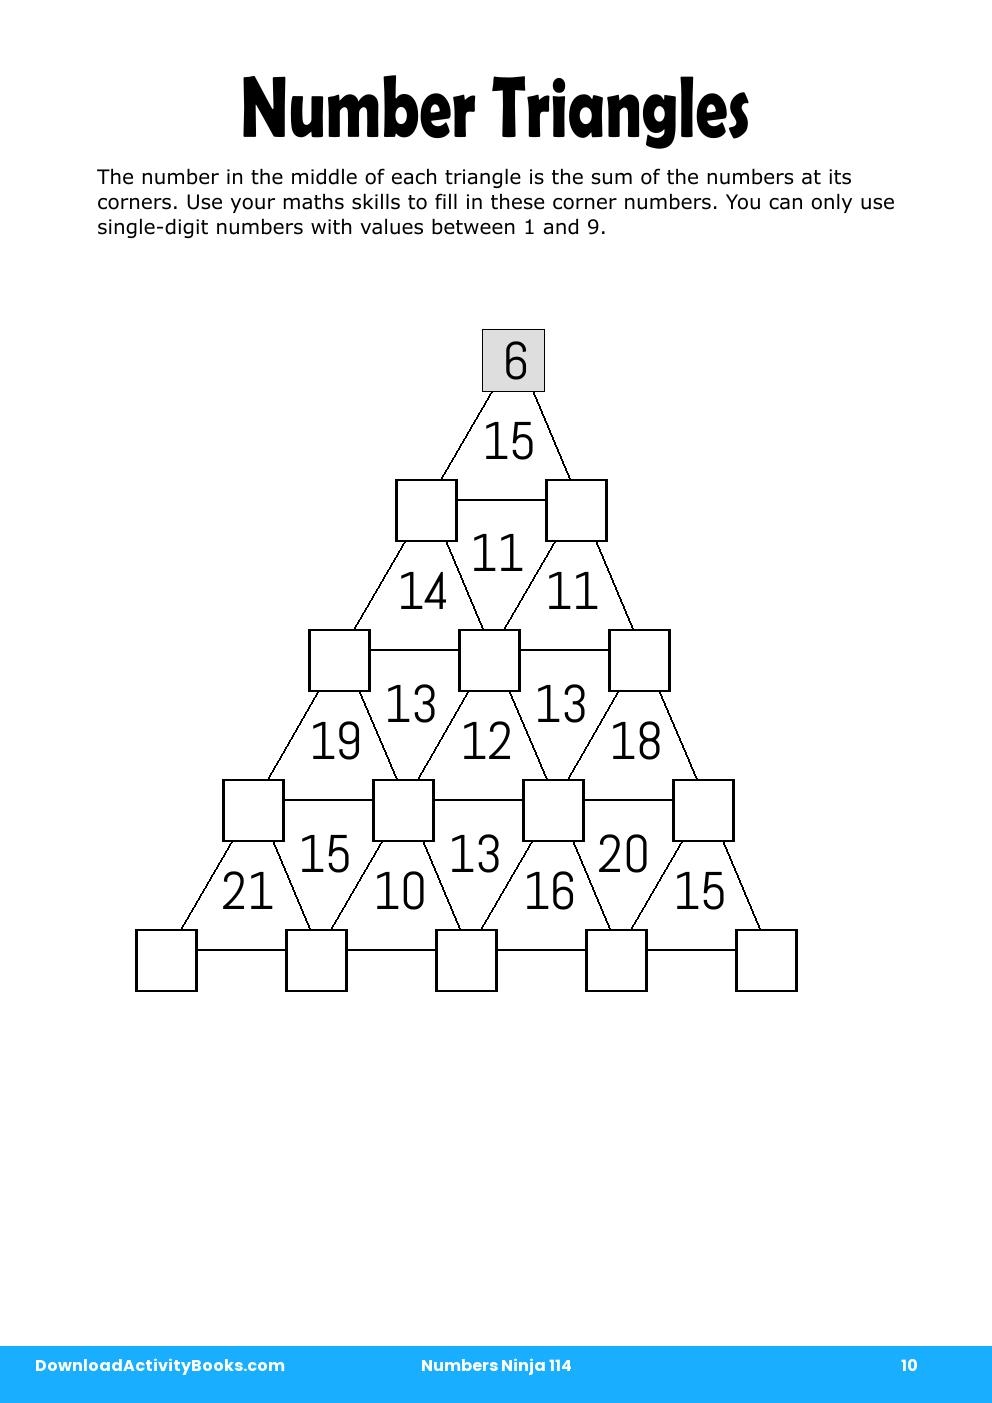 Number Triangles in Numbers Ninja 114